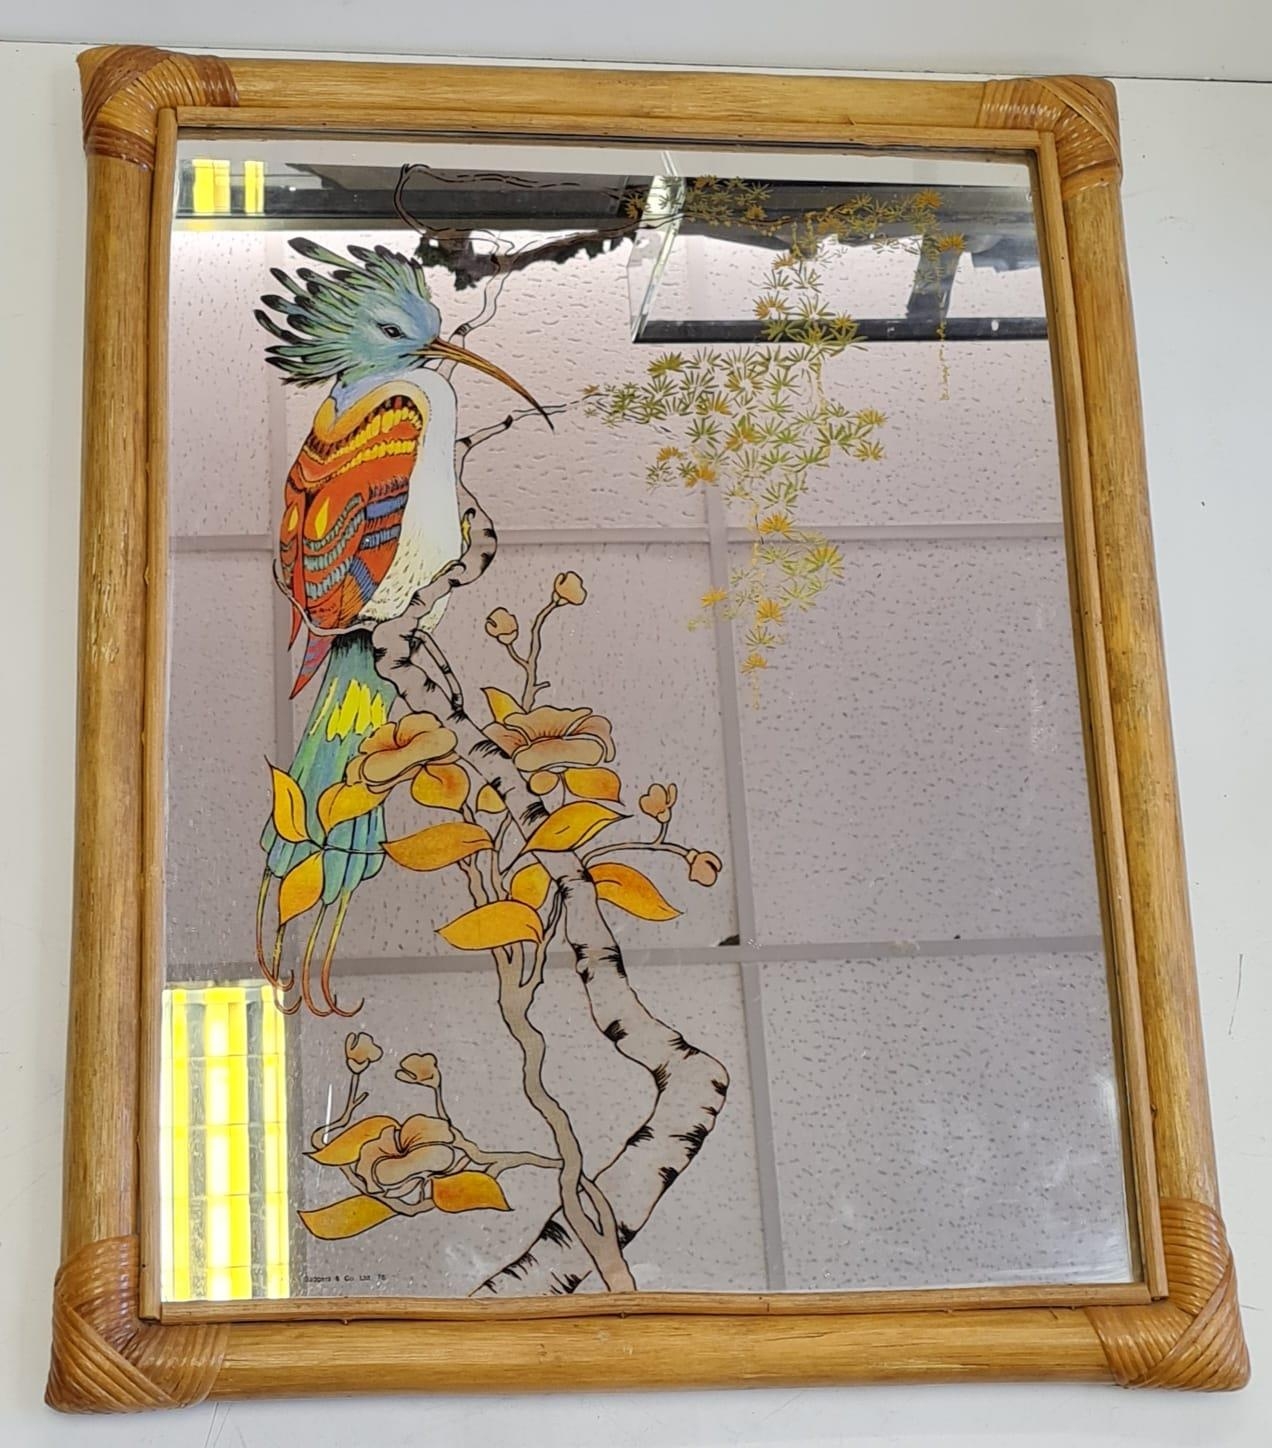 Large wood framed mirror incorporating a bird design.